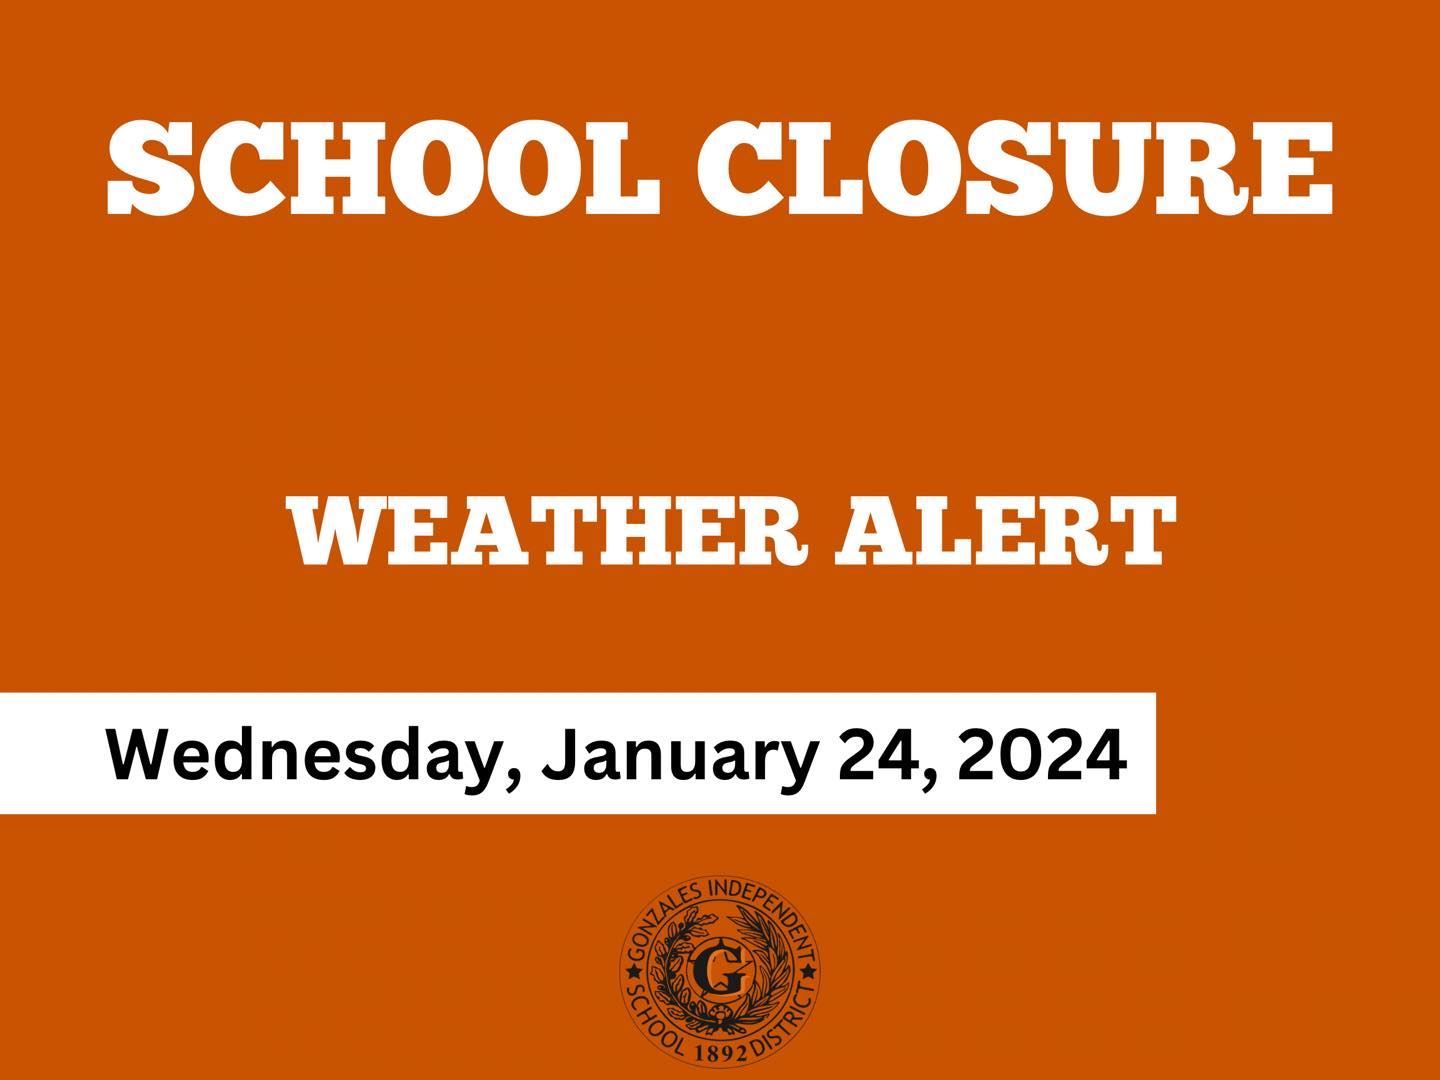 School Closure- Wednesday, January 24, 2024